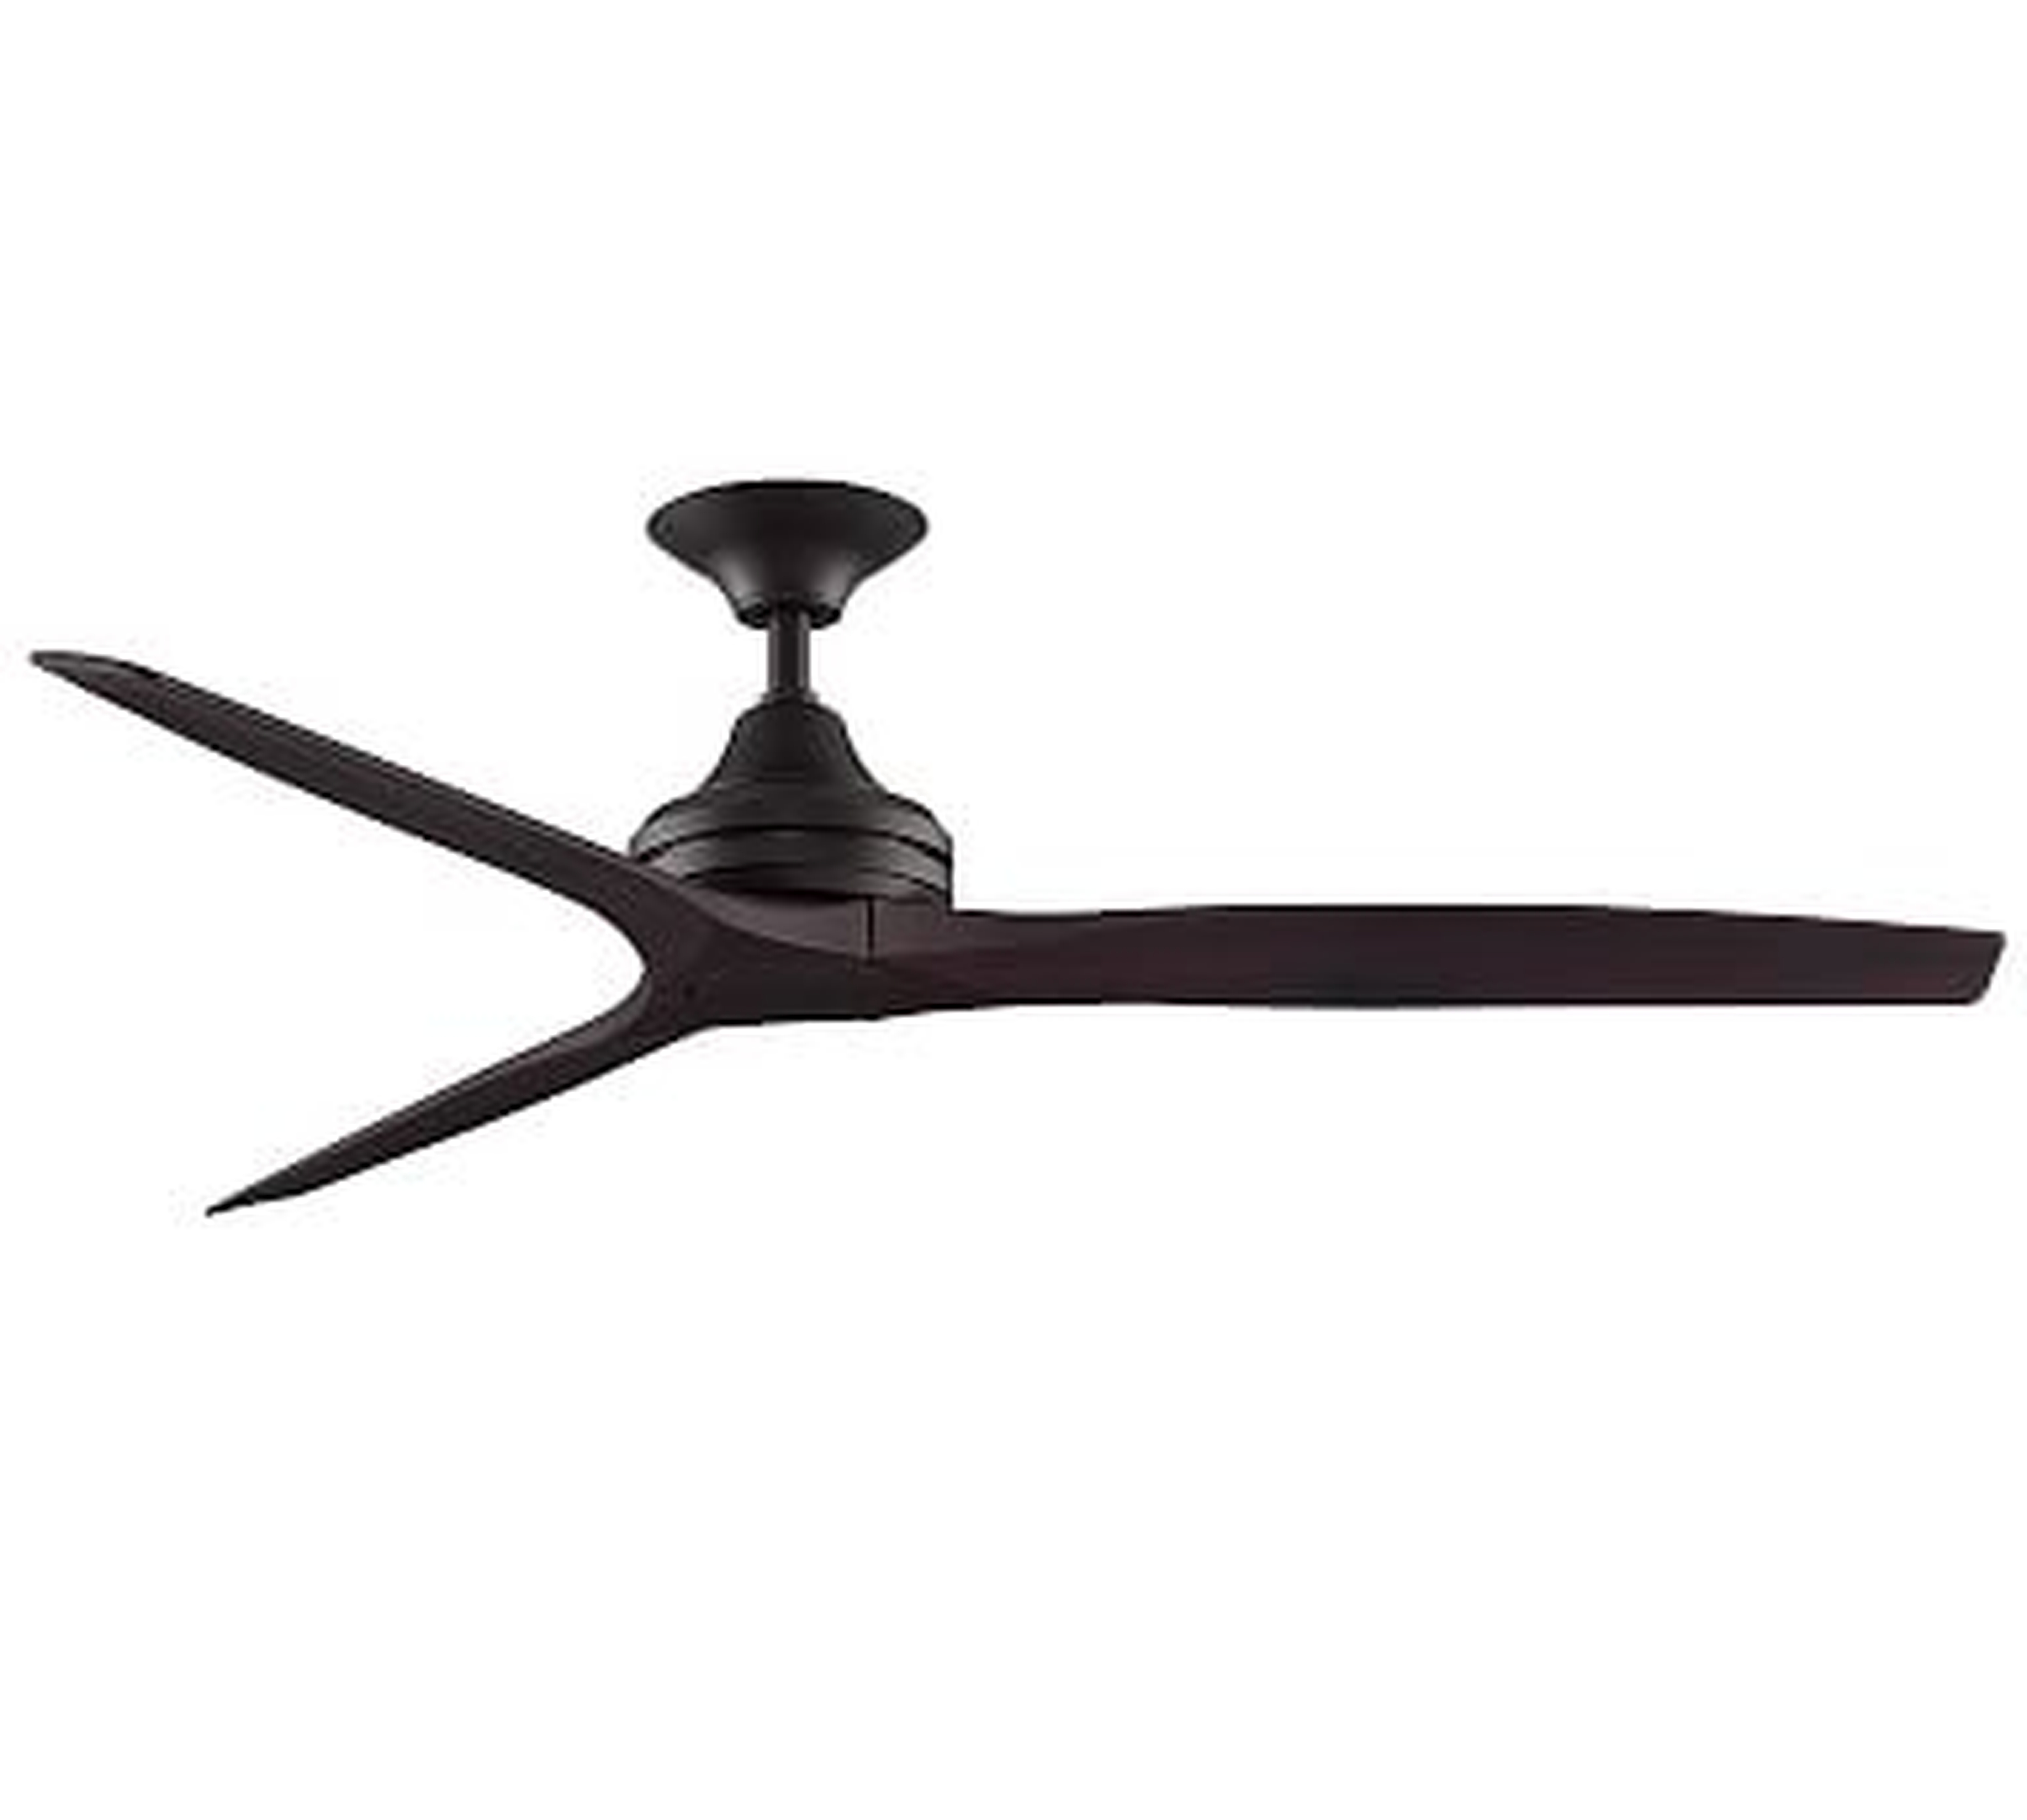 60" Spitfire Indoor/Outdoor Ceiling Fan, Dark Bronze Motor with Dark Walnut Blades - Pottery Barn